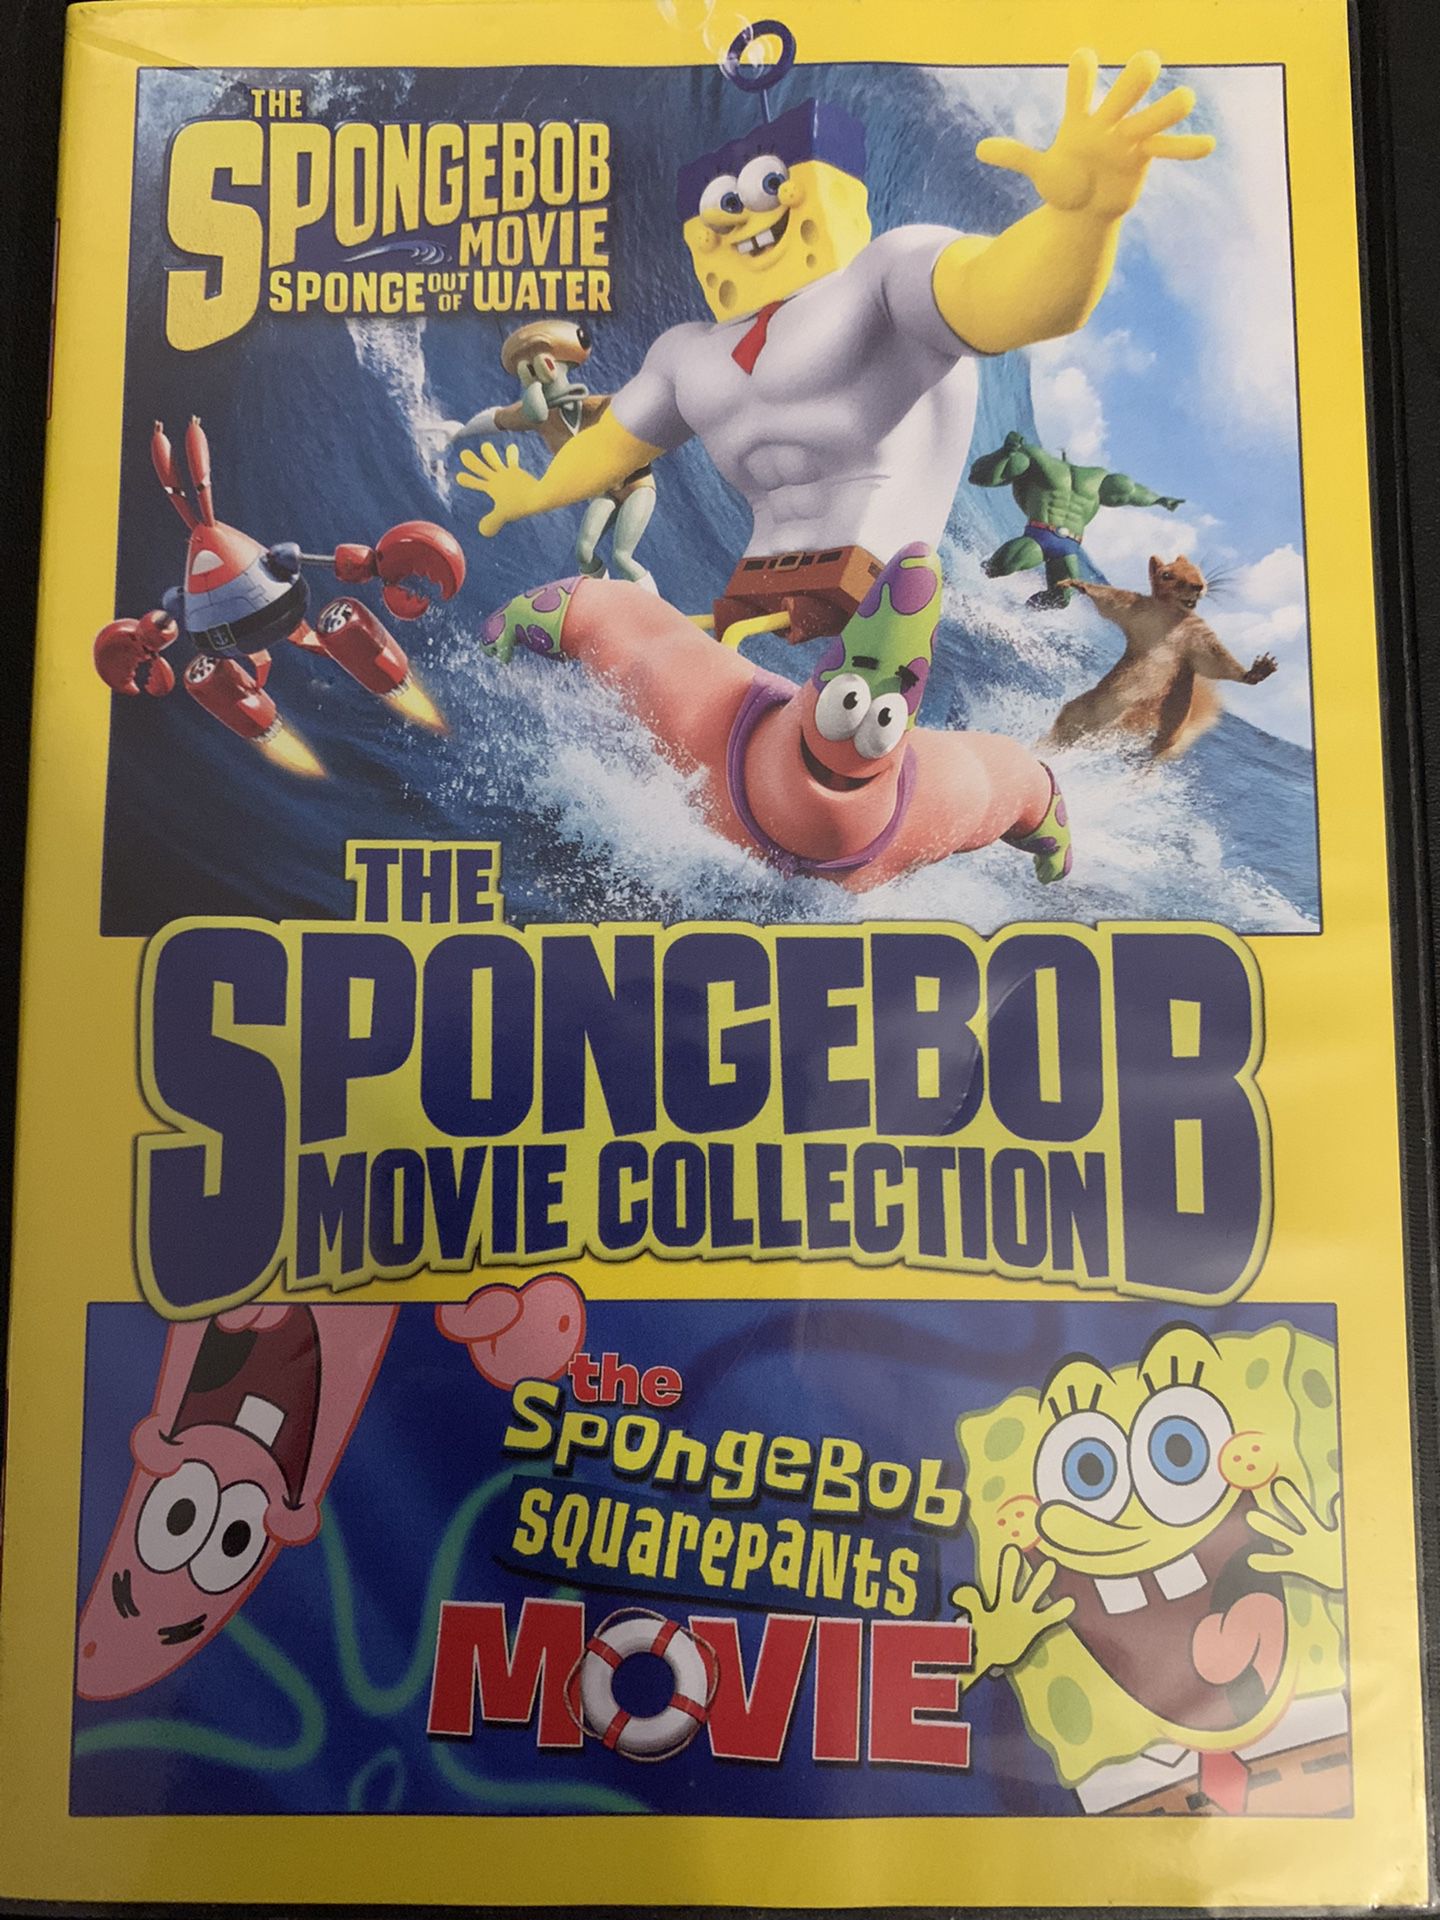 Nickelodeon’s The SPONGEBOB Movie Collection (DVD)